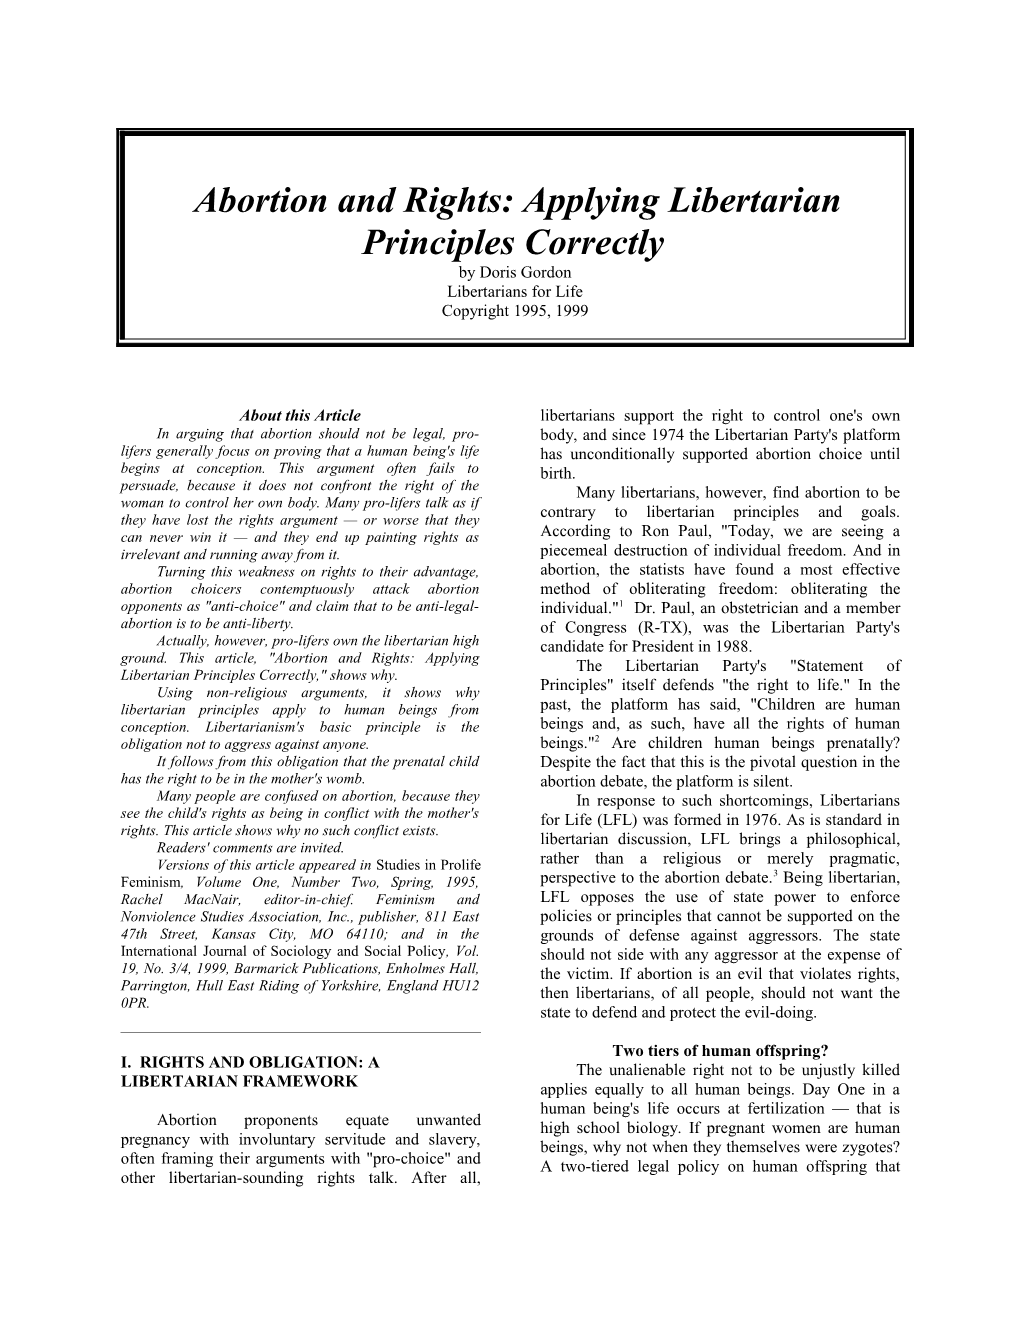 Abortion and Rights: Applying Libertarian Principles Correctly